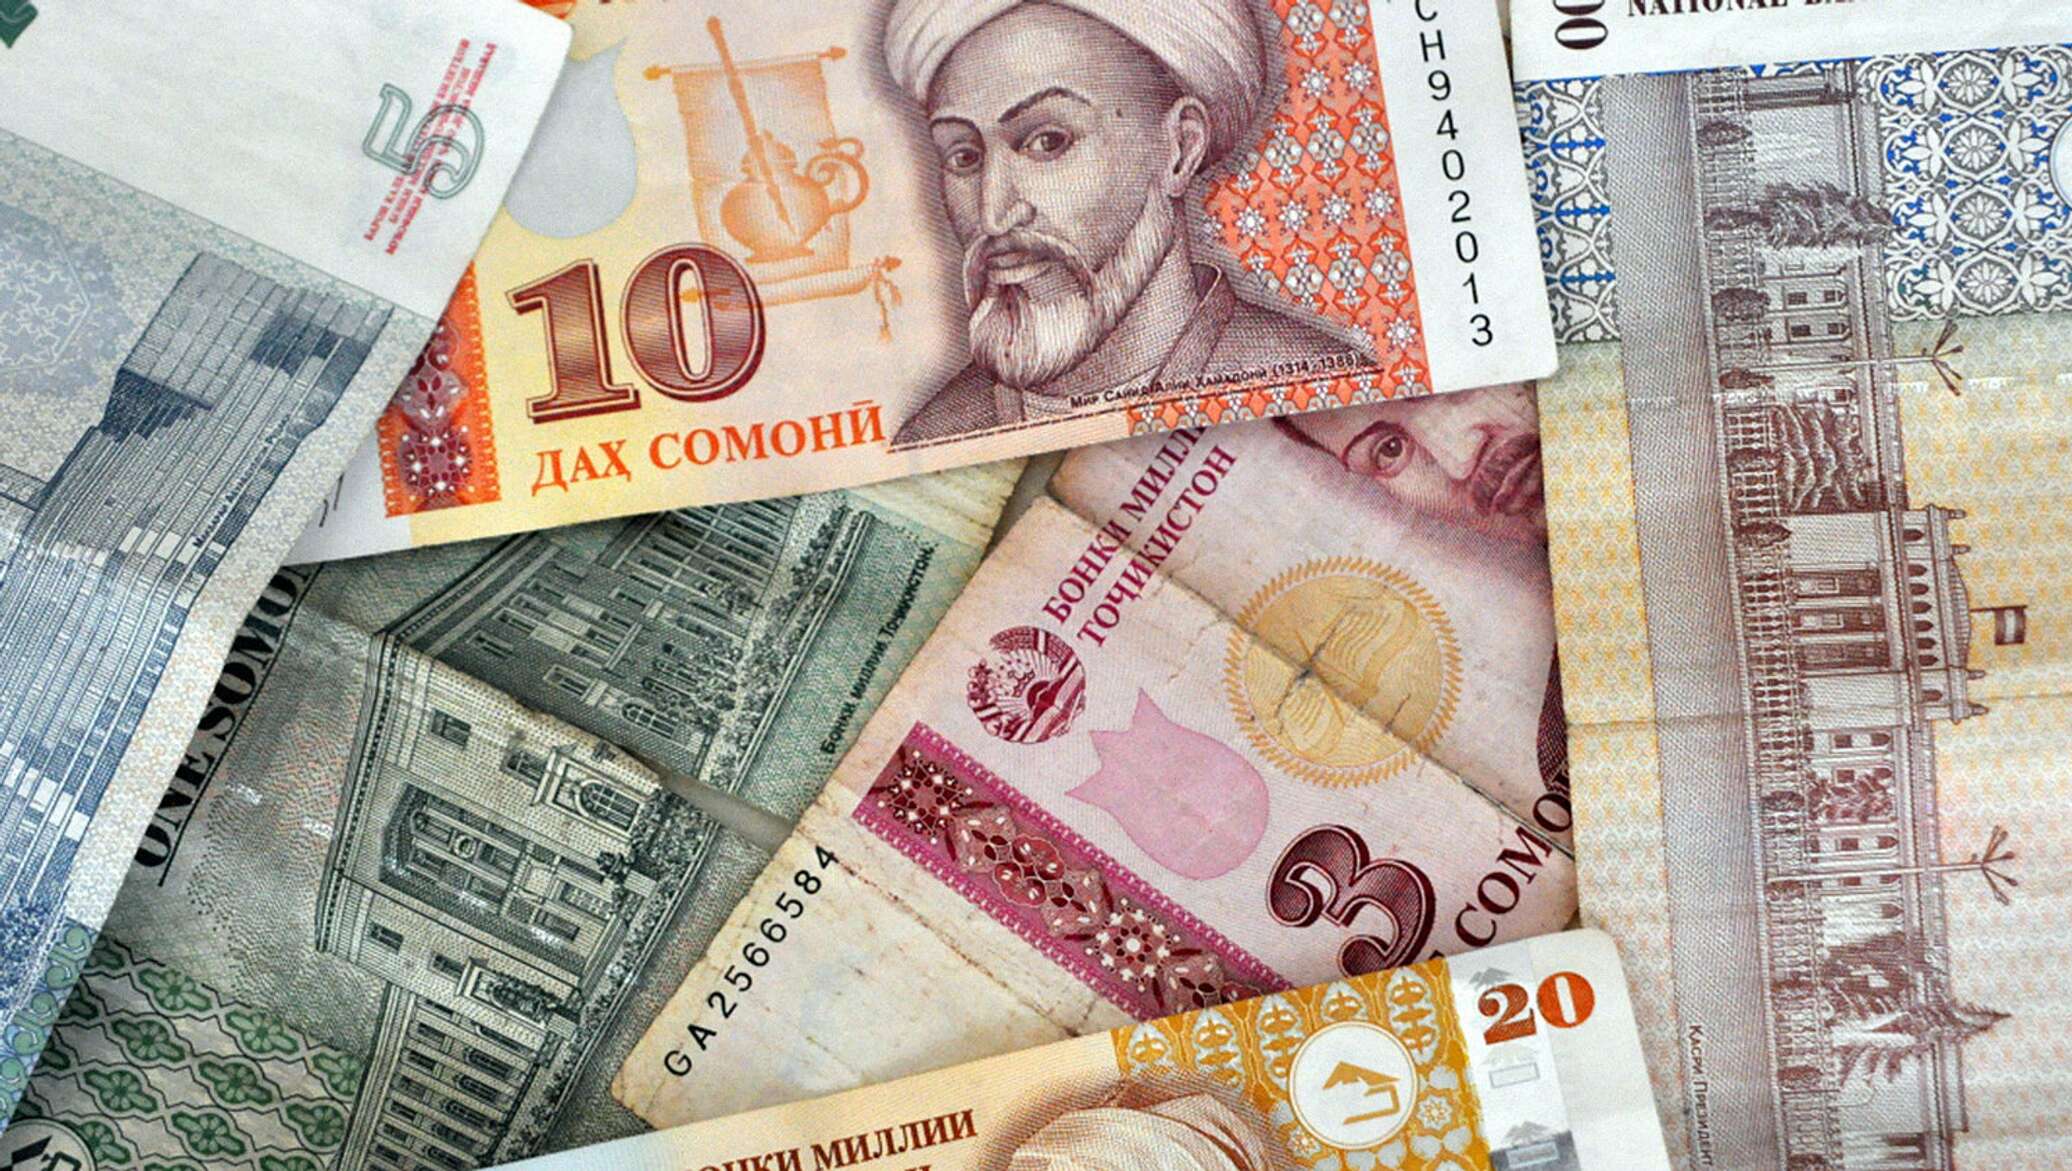 1 таджикский сомони. Деньги Таджикистана. Деньги Сомони. Купюра Сомони. Национальная валюта Таджикистана.